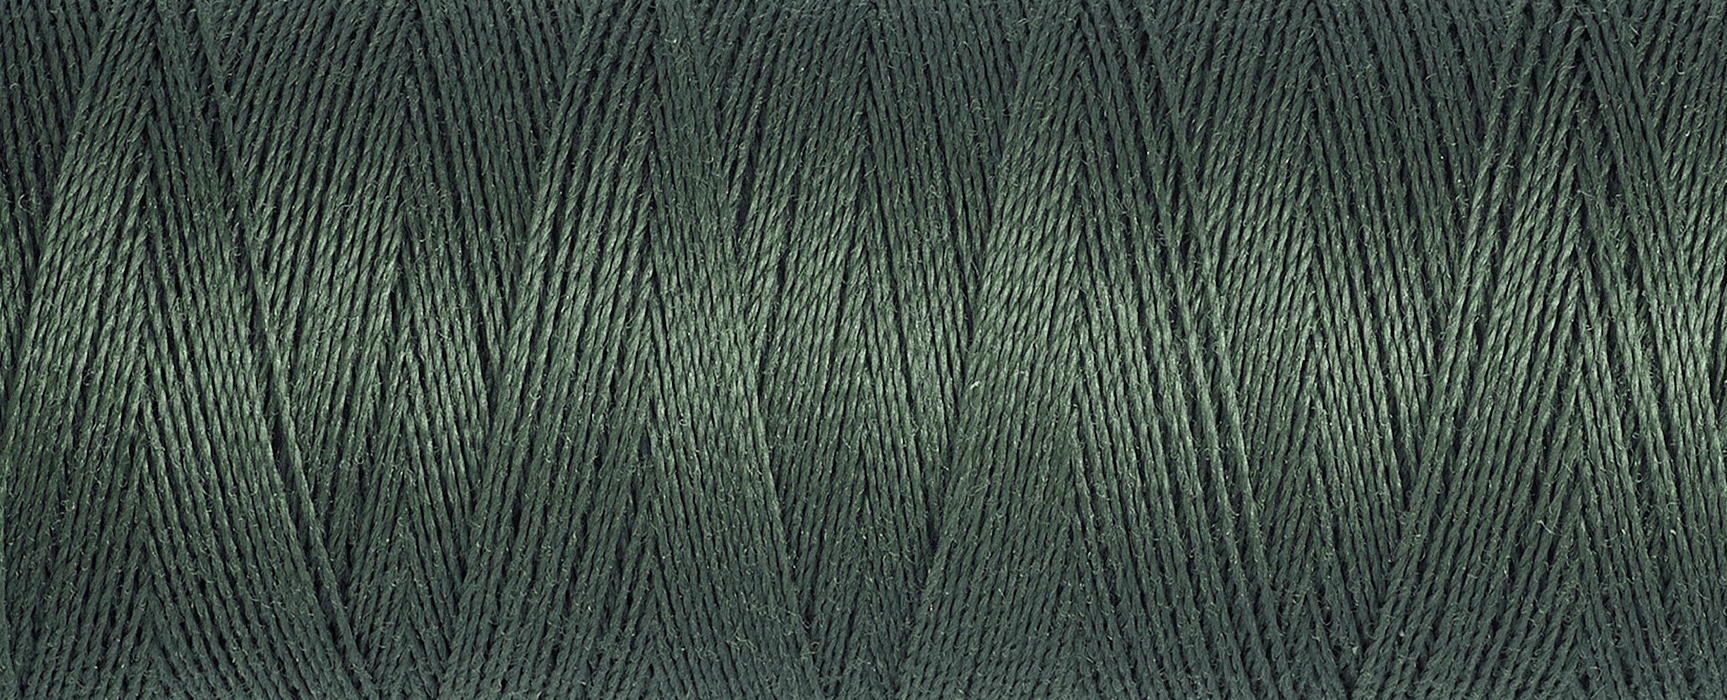 Gutermann Sew-All Thread - 100M (269)-Thread-Jelly Fabrics